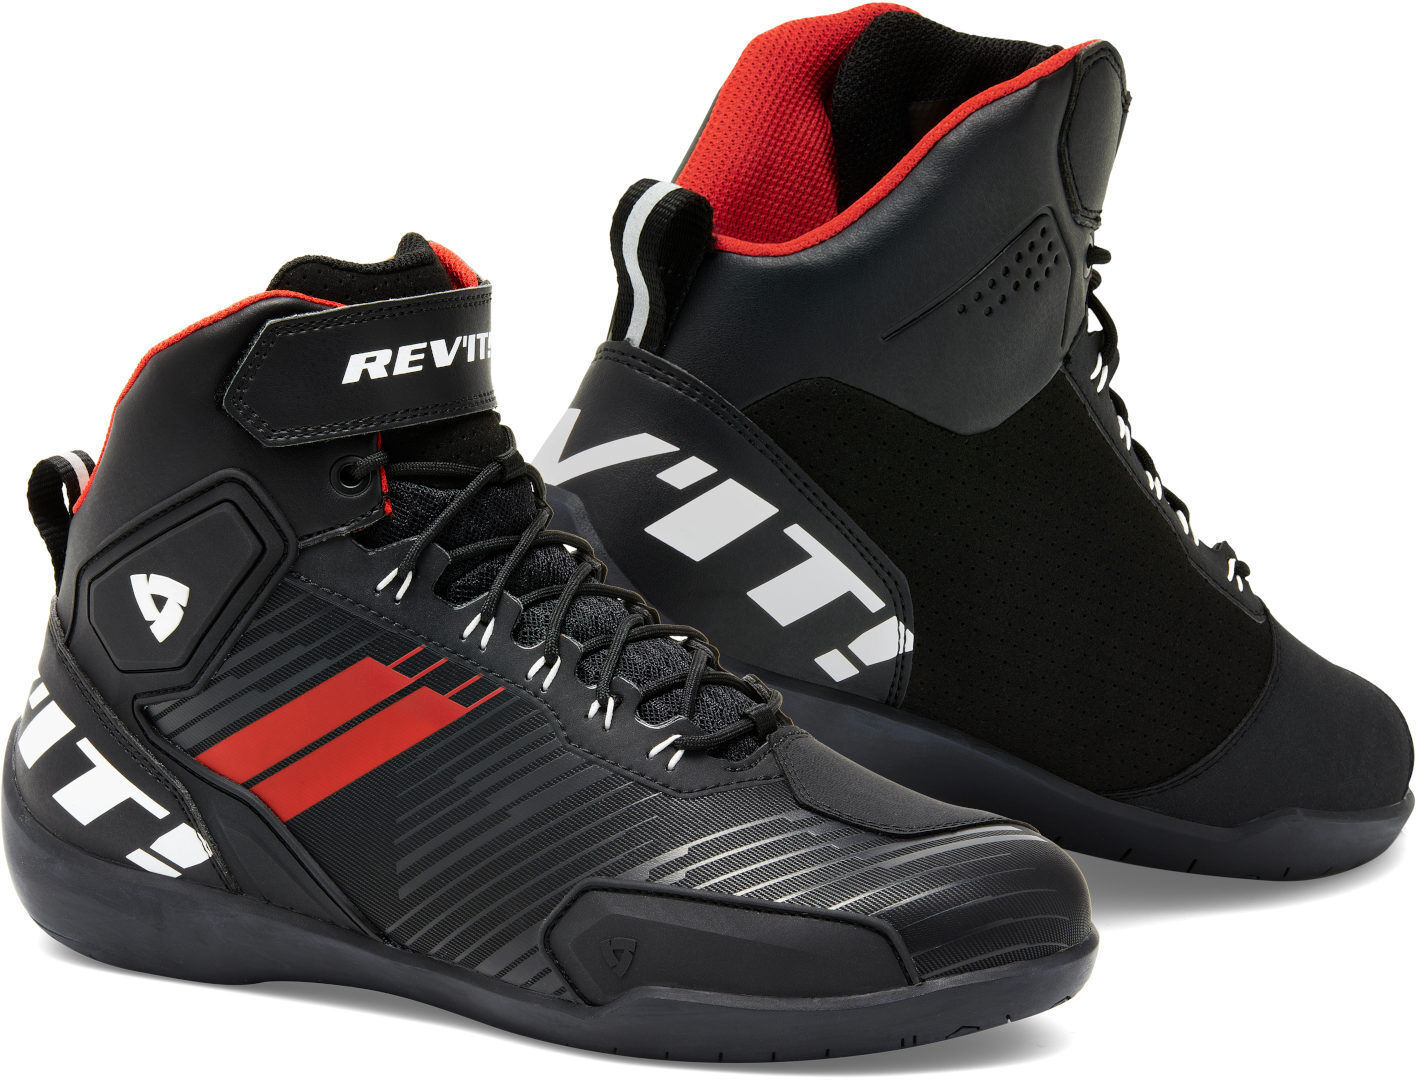 Revit G-Force Zapatos de motocicleta - Negro Blanco Rojo (43)